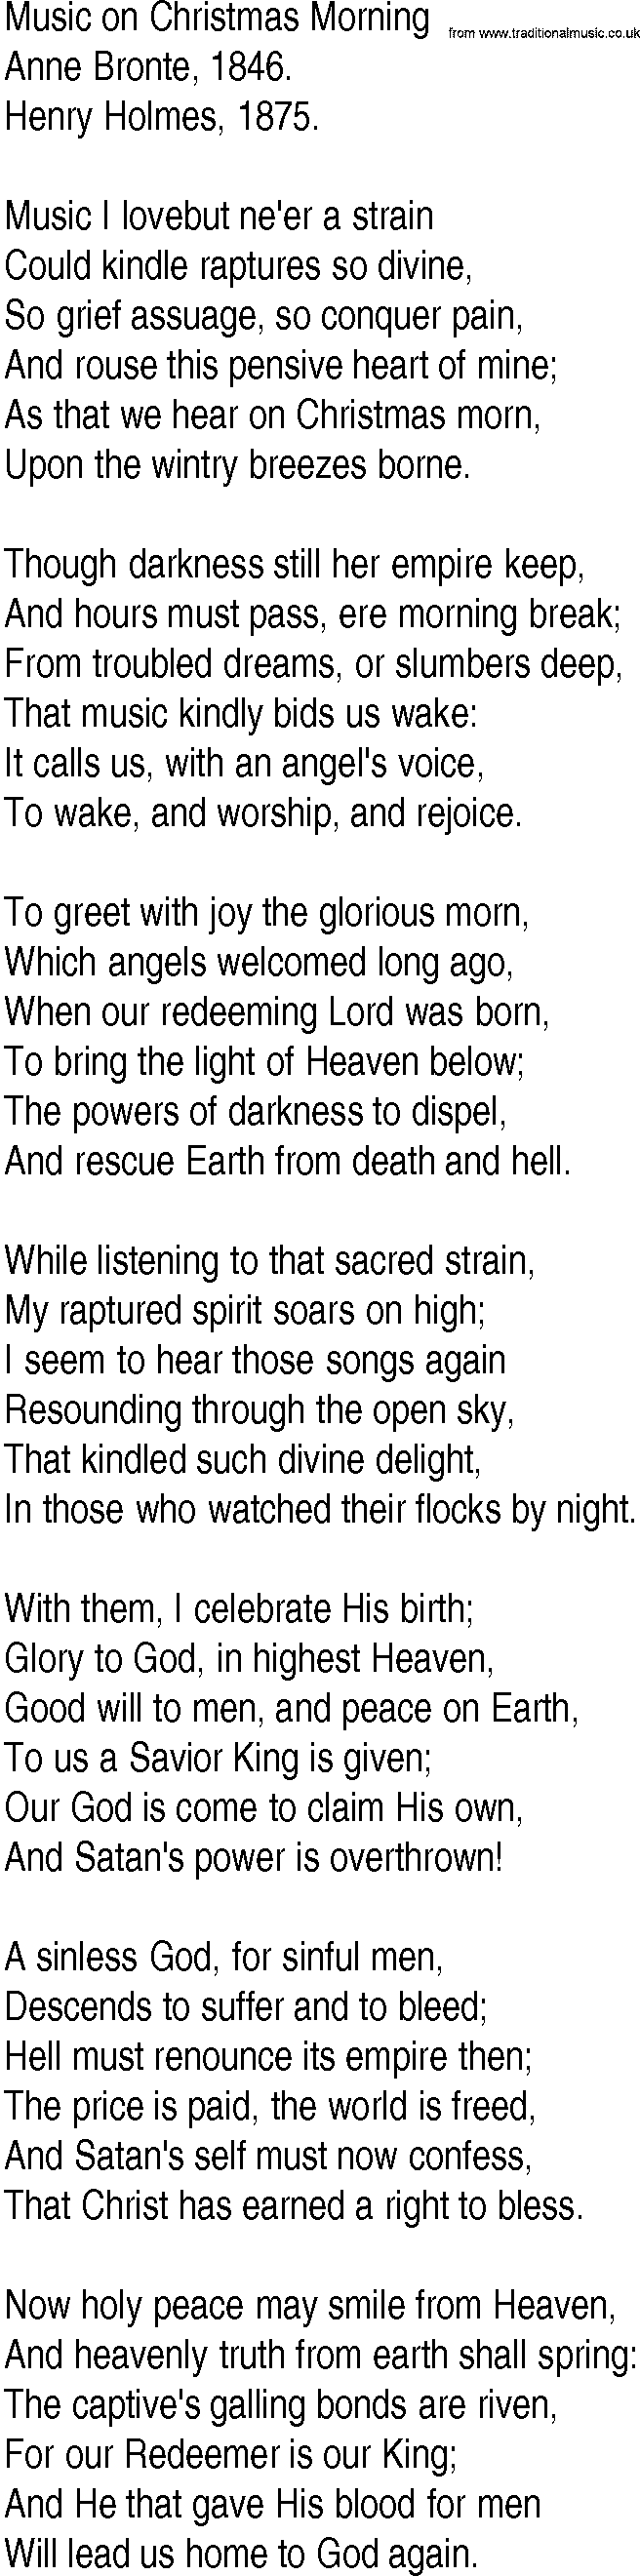 Hymn and Gospel Song: Music on Christmas Morning by Anne Bronte lyrics